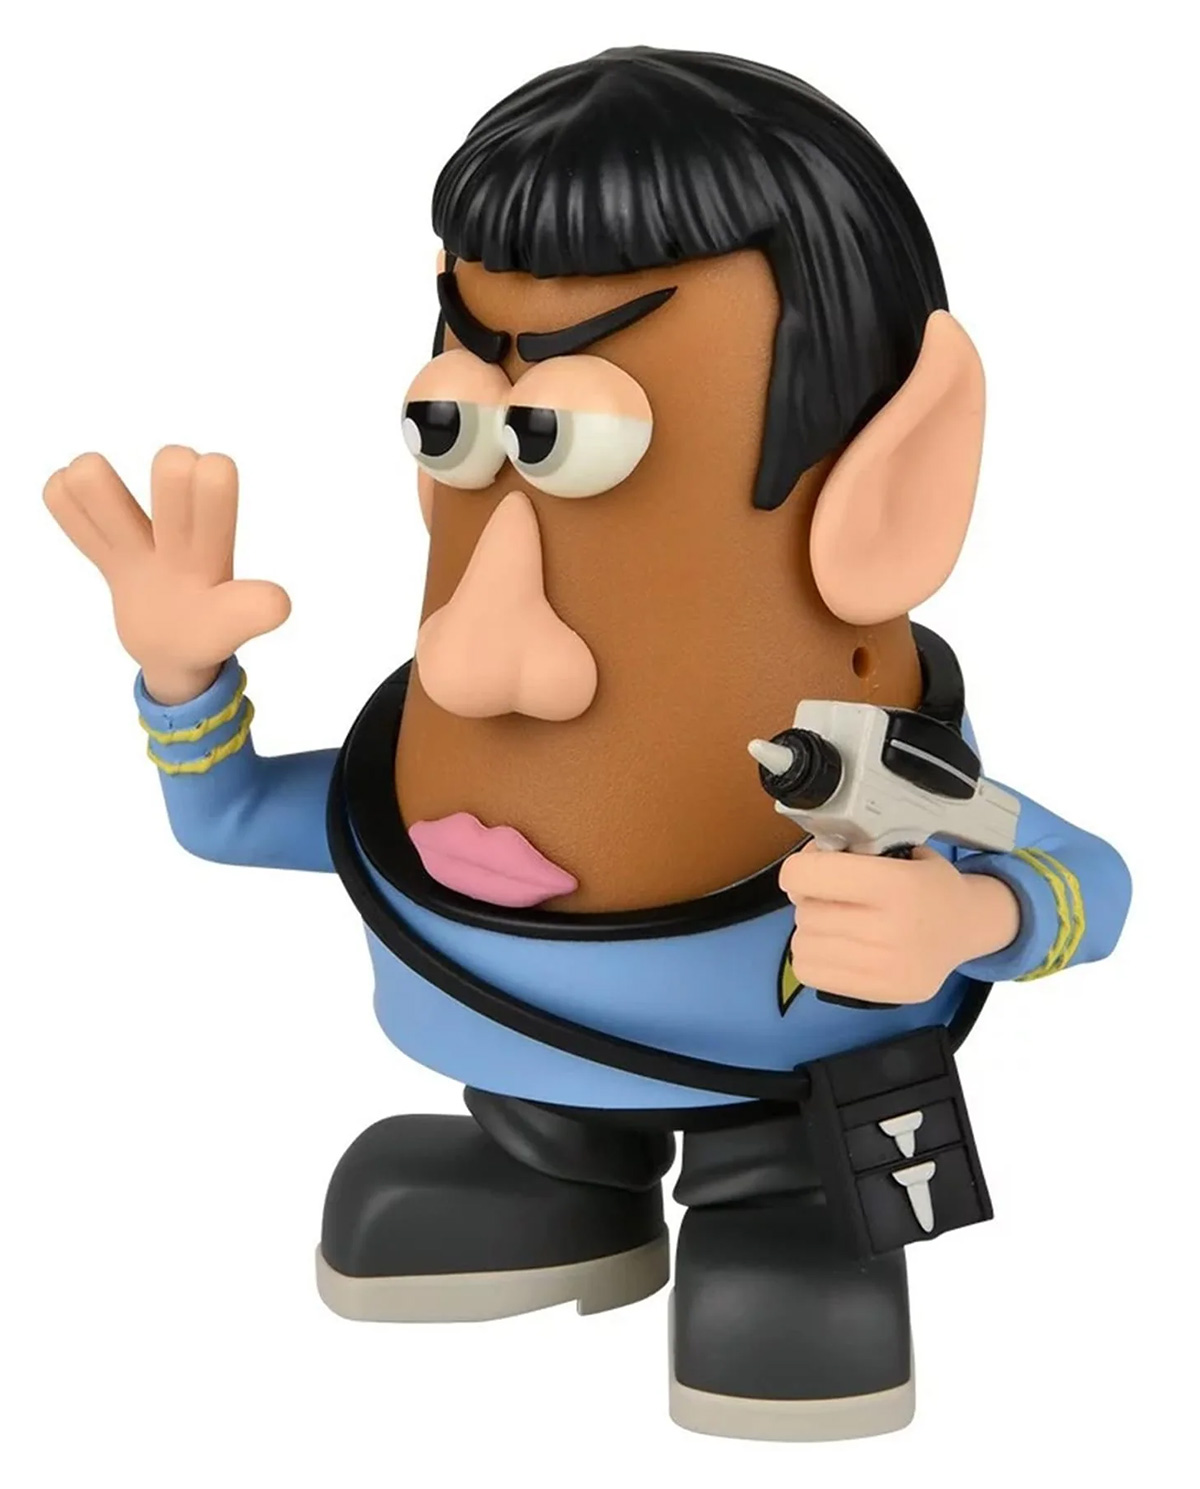 PopTaters Mr. Spock Potato Head Doll (Star Trek TOS)